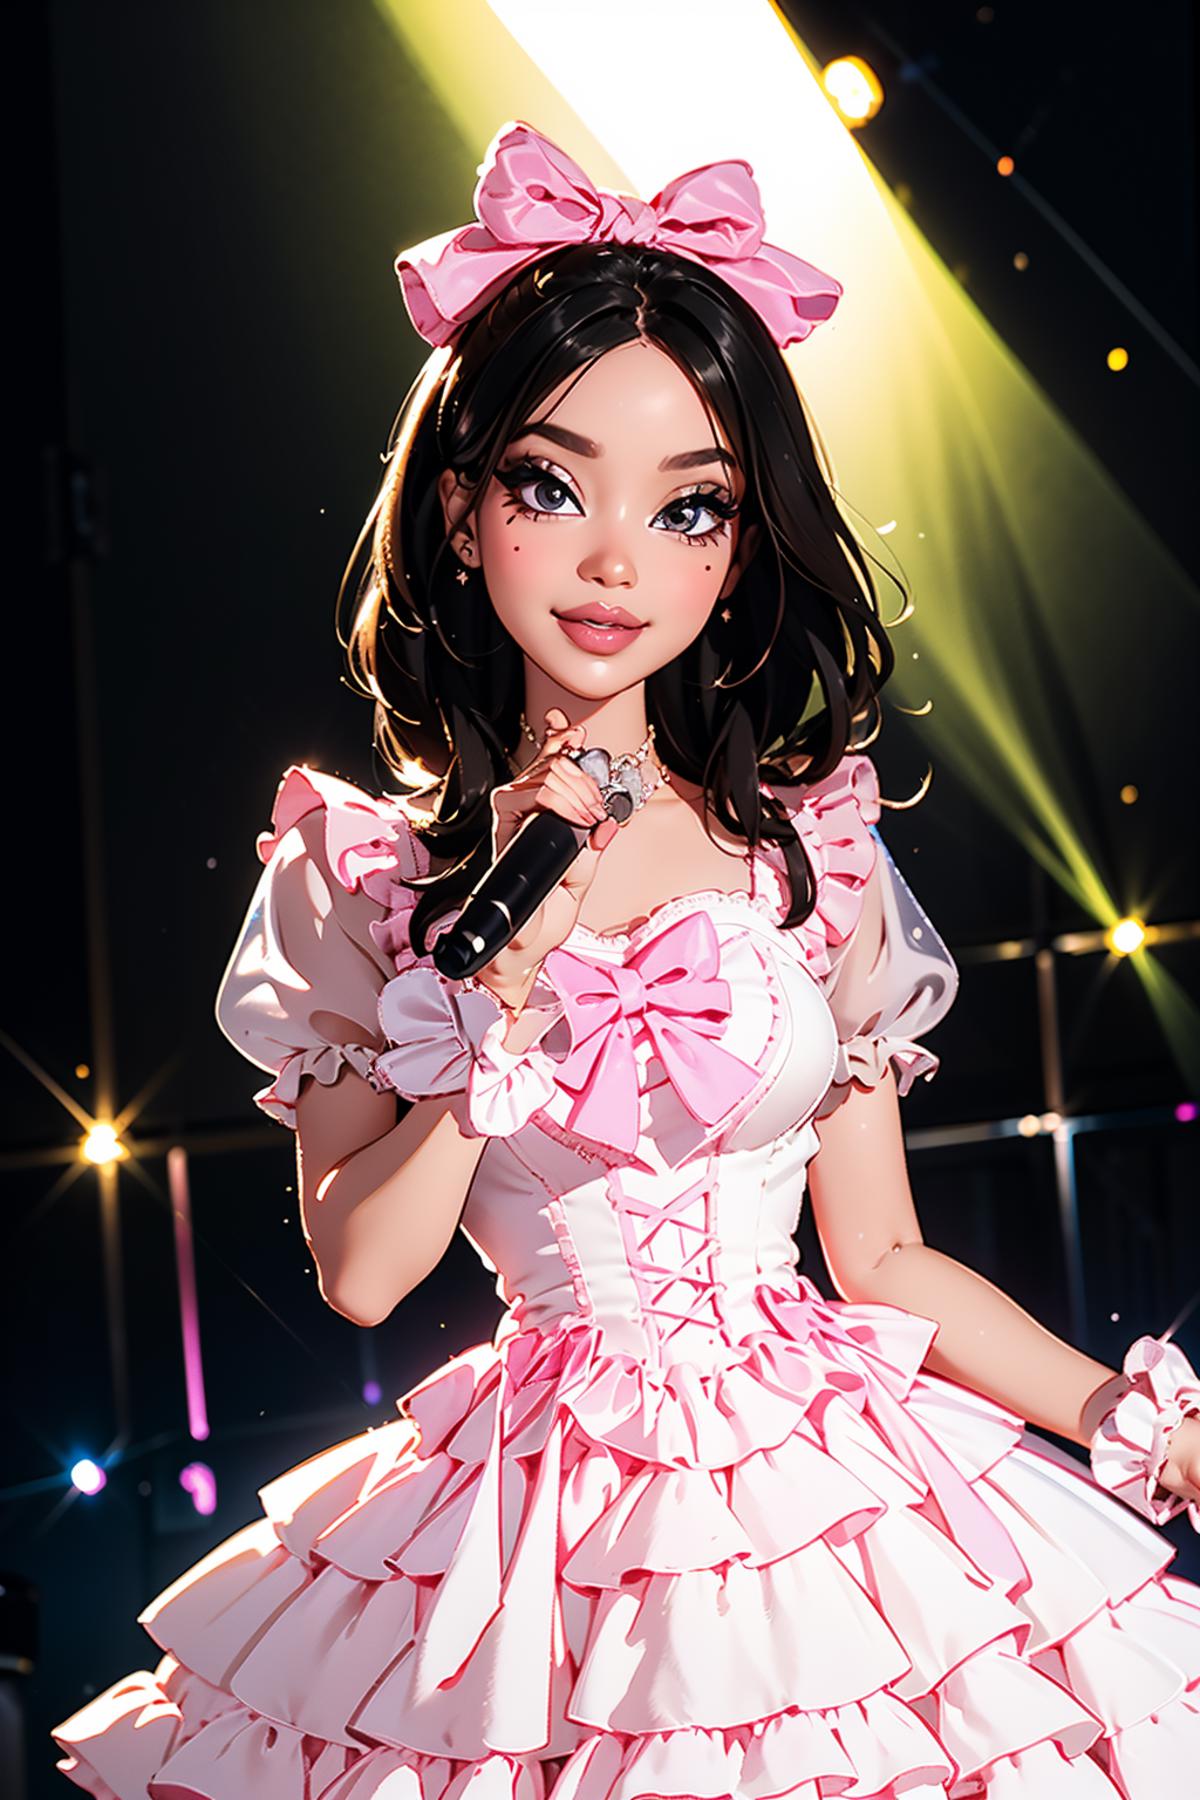 [Realistic] Idol costume | 偶像打歌服 | アイドル衣装 image by RubberDuckie